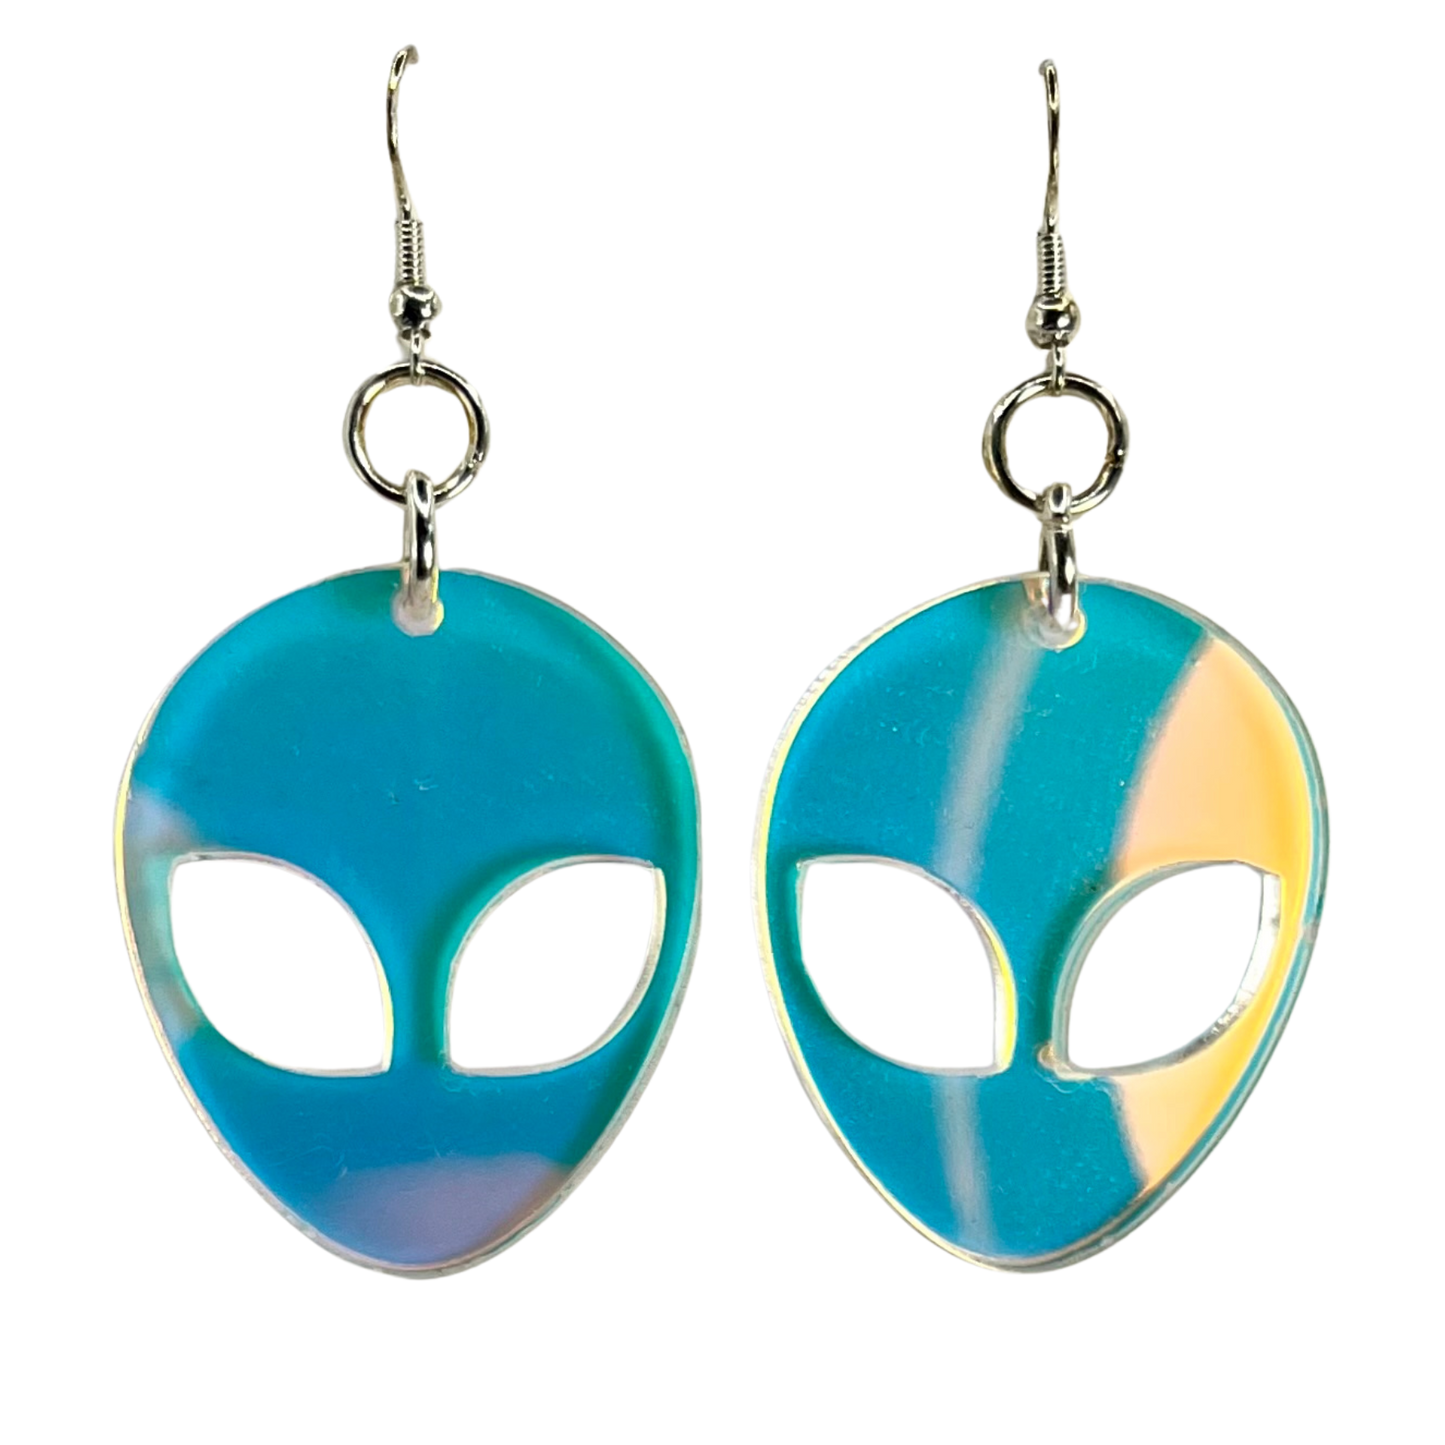 Iridescent Alien Earrings